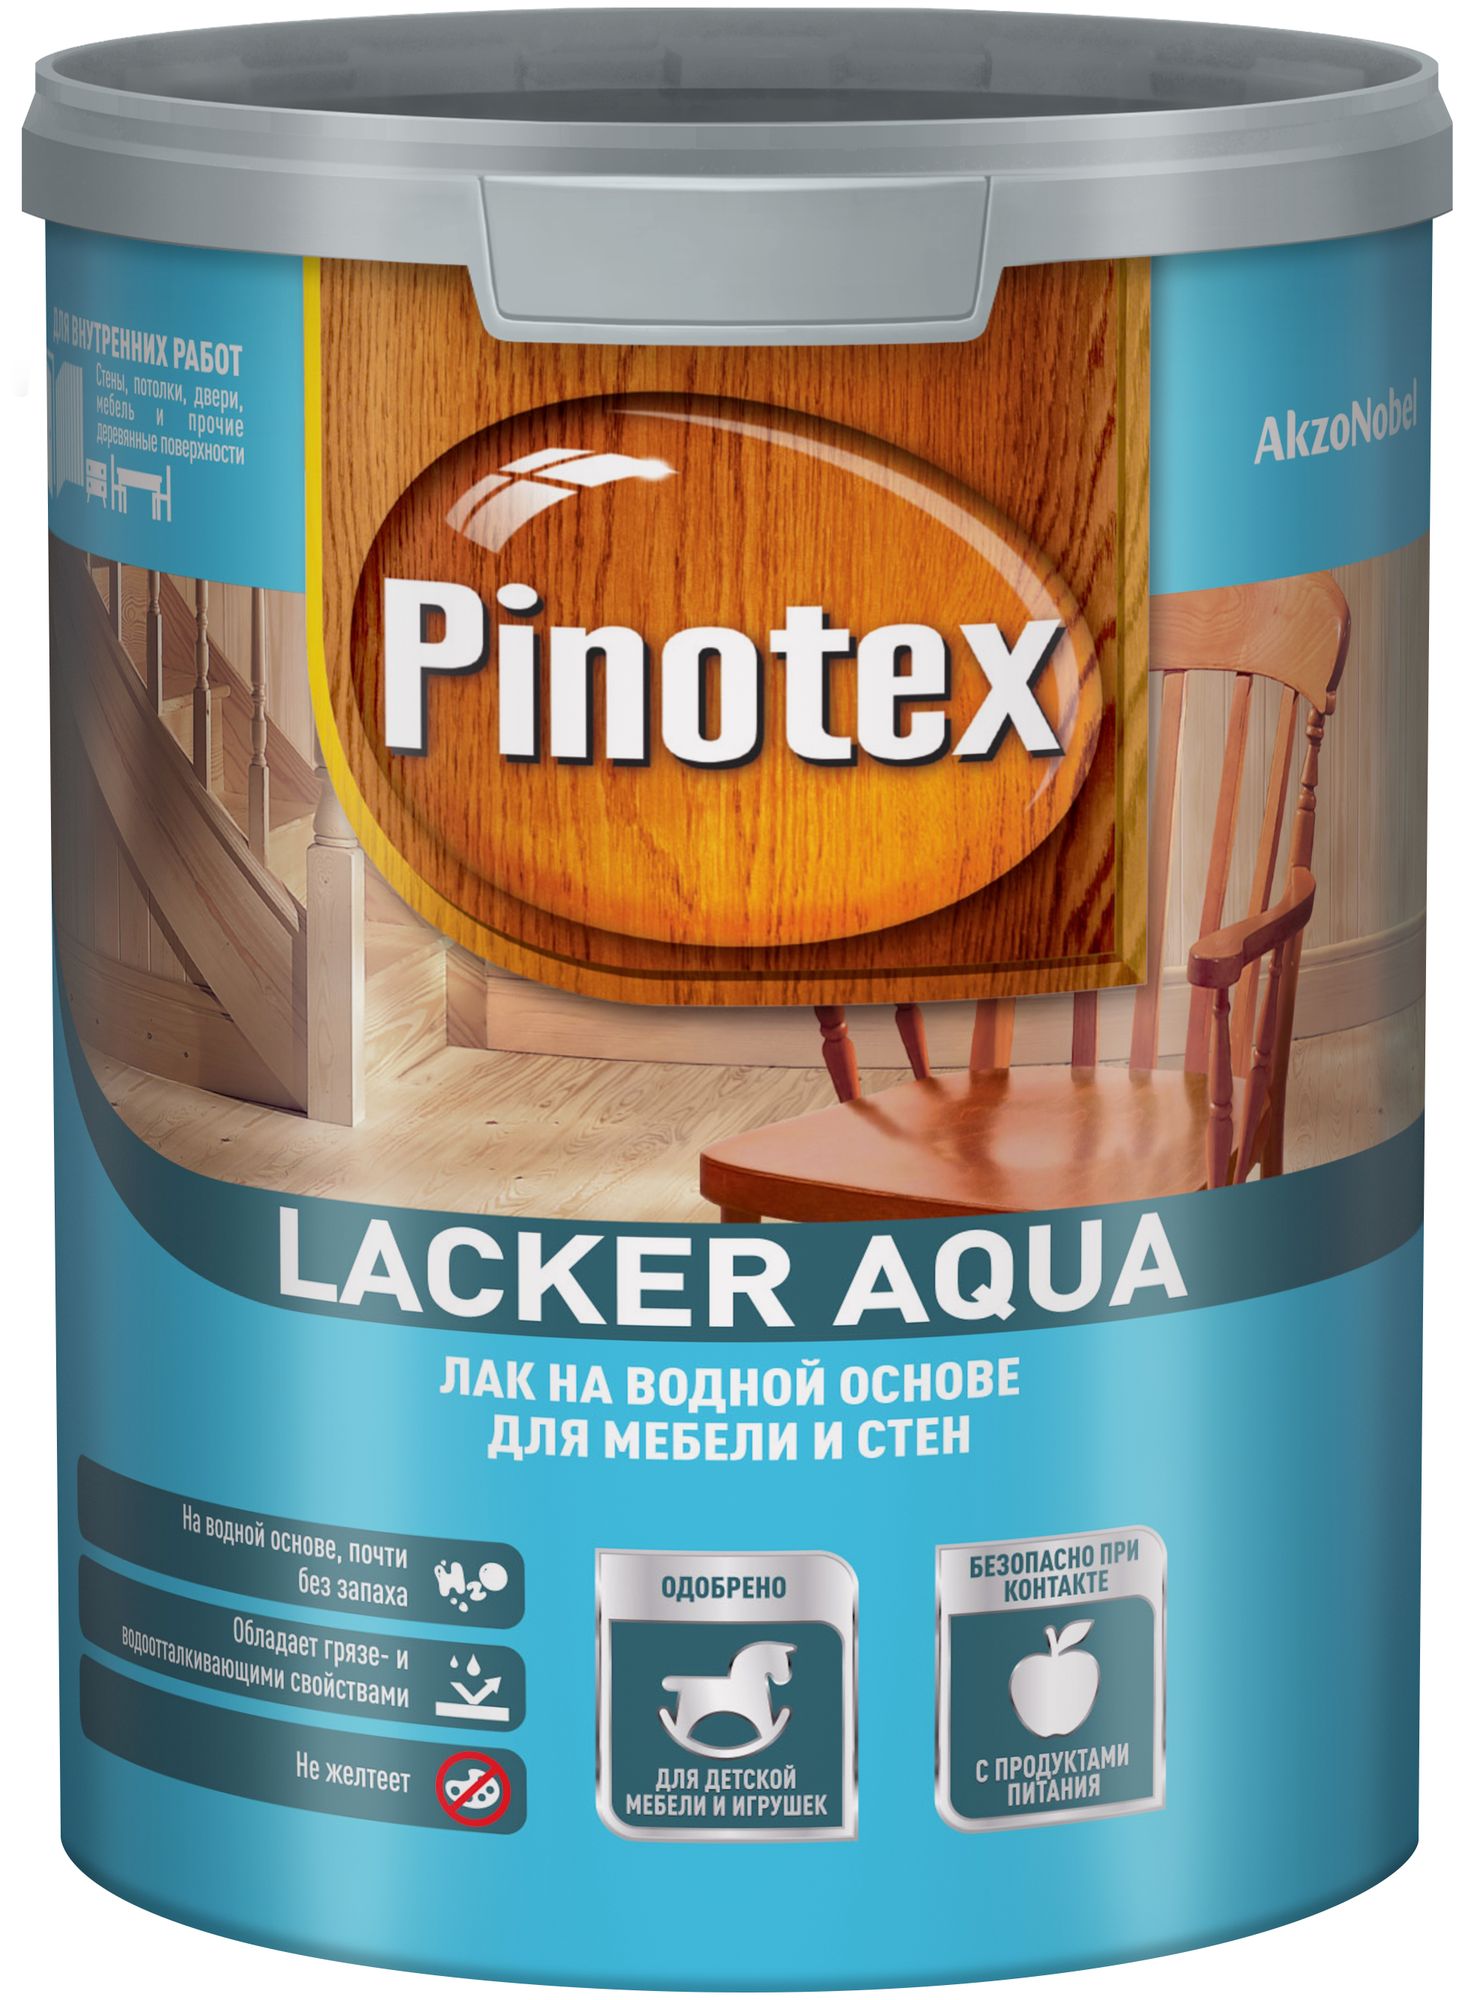 Pinotex Lacker Aqua